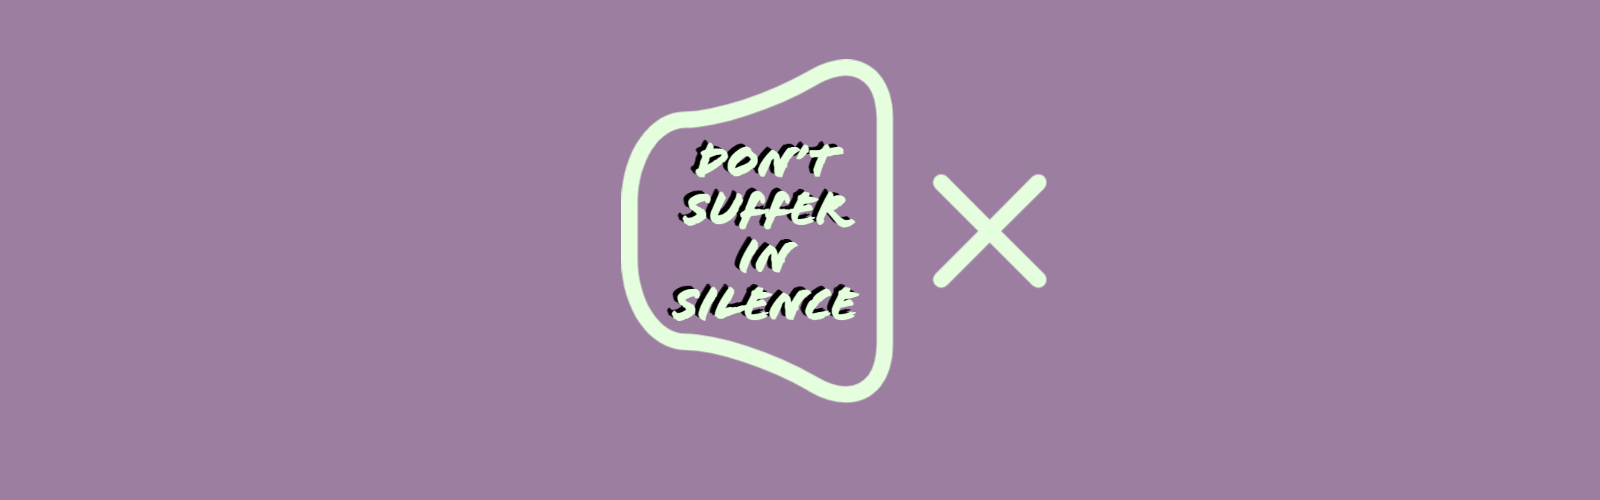 Don't suffer in silence.